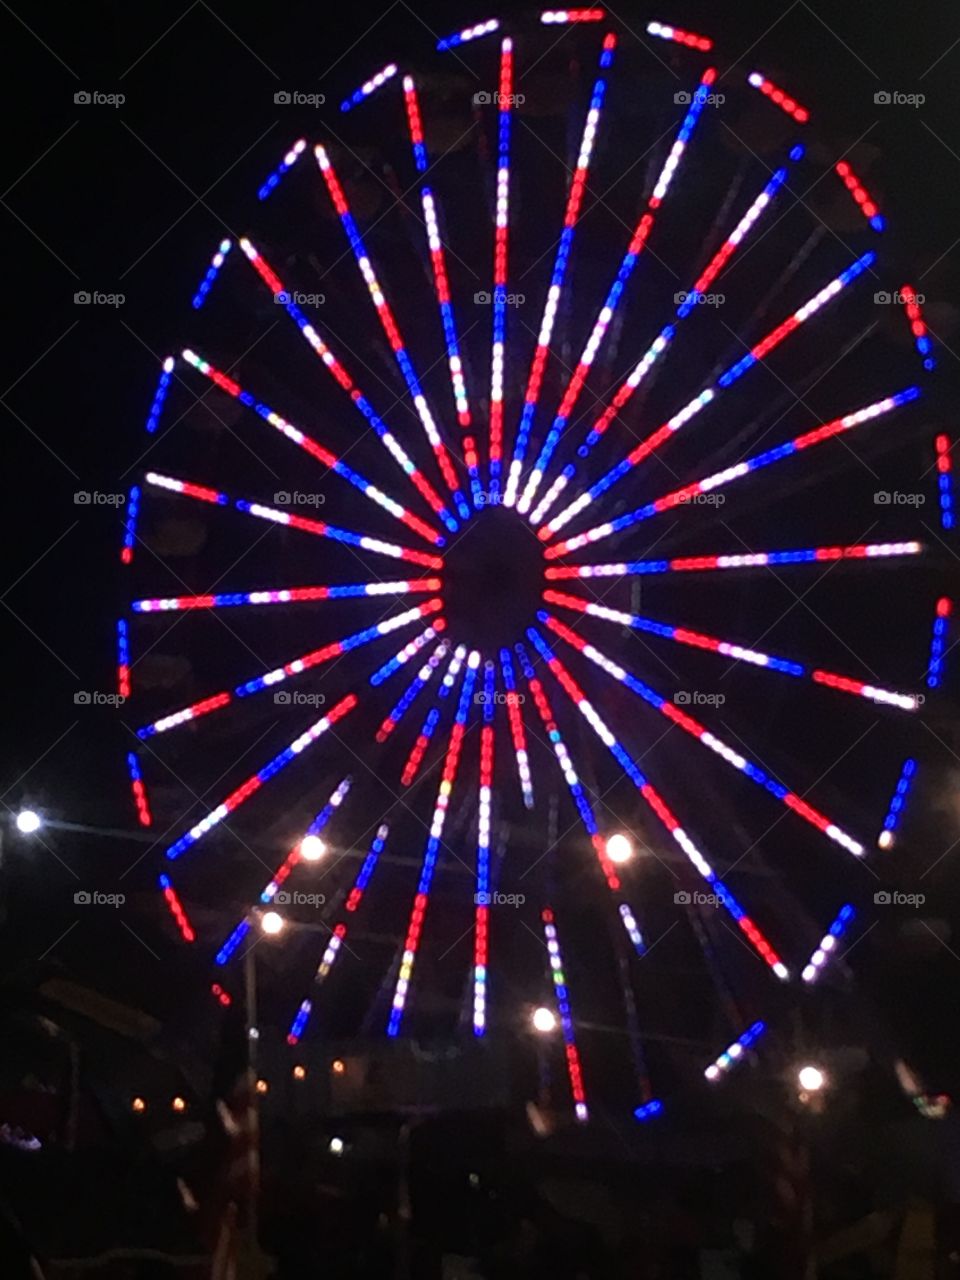 Giant Ferris wheels at the canfieldfair